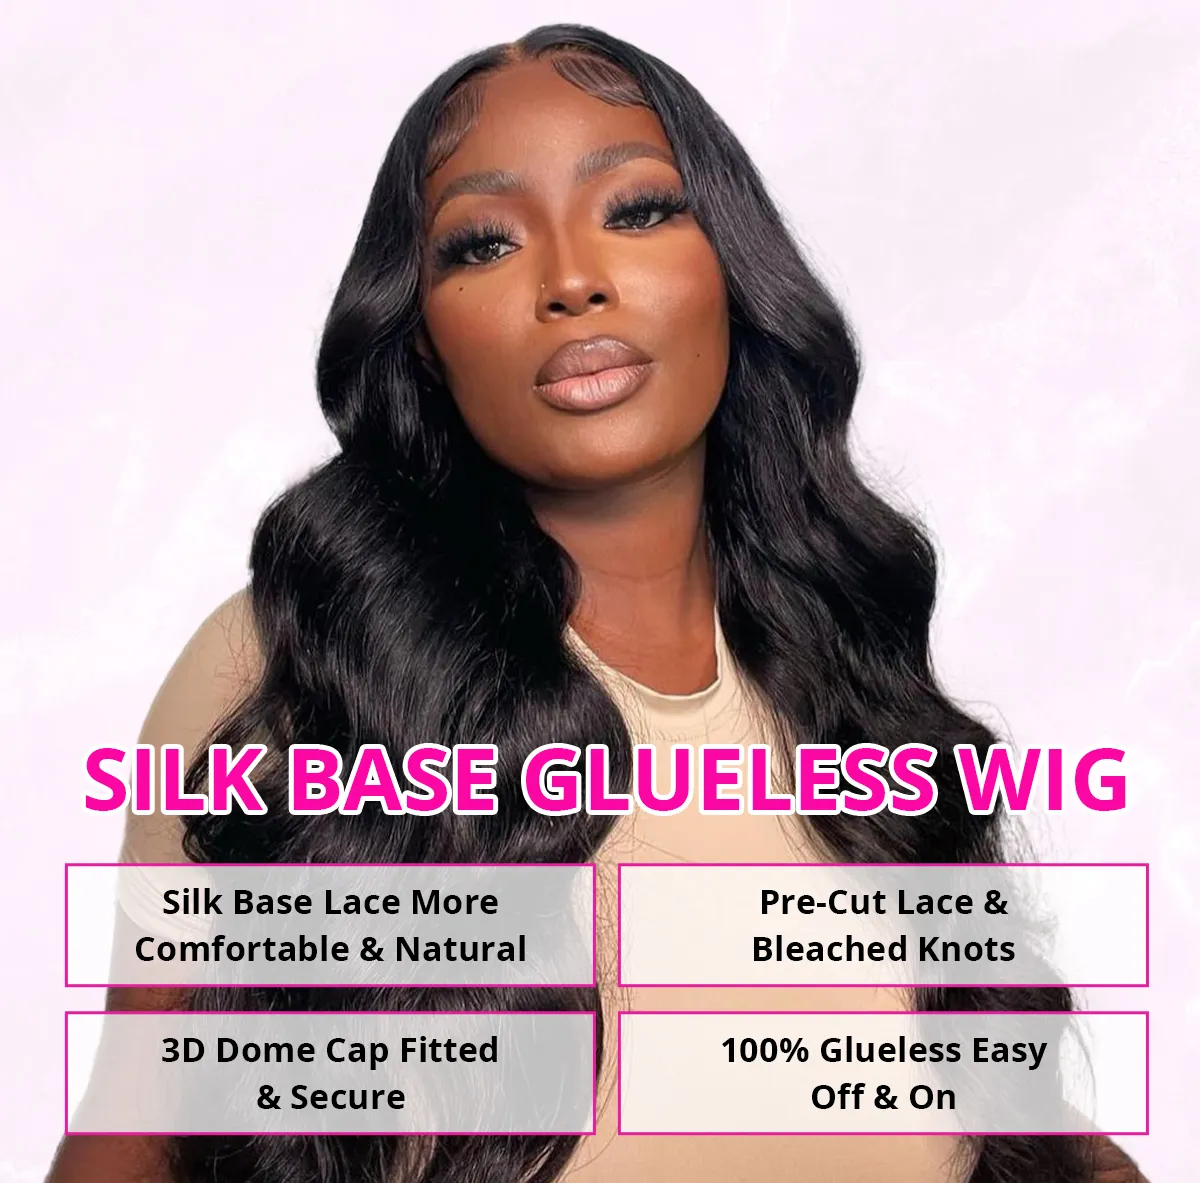 Tinashe hair silk base lace wig details (3)